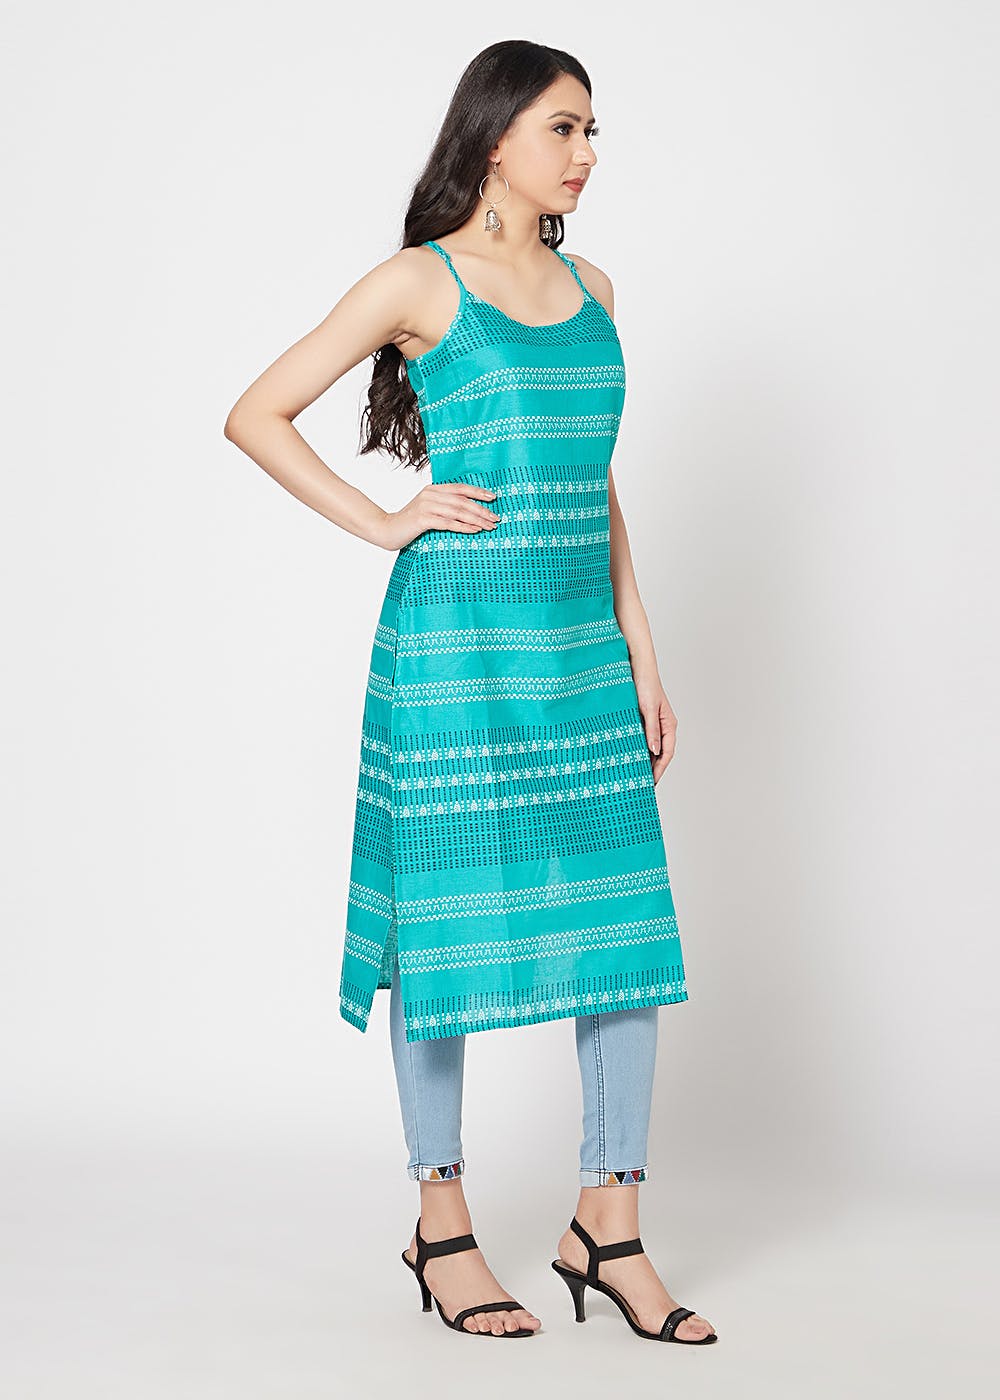 Bollywood Ready Made Salwar Suit Blue Sleeveless Kurta Pant Rayon Fabric  Dress | eBay